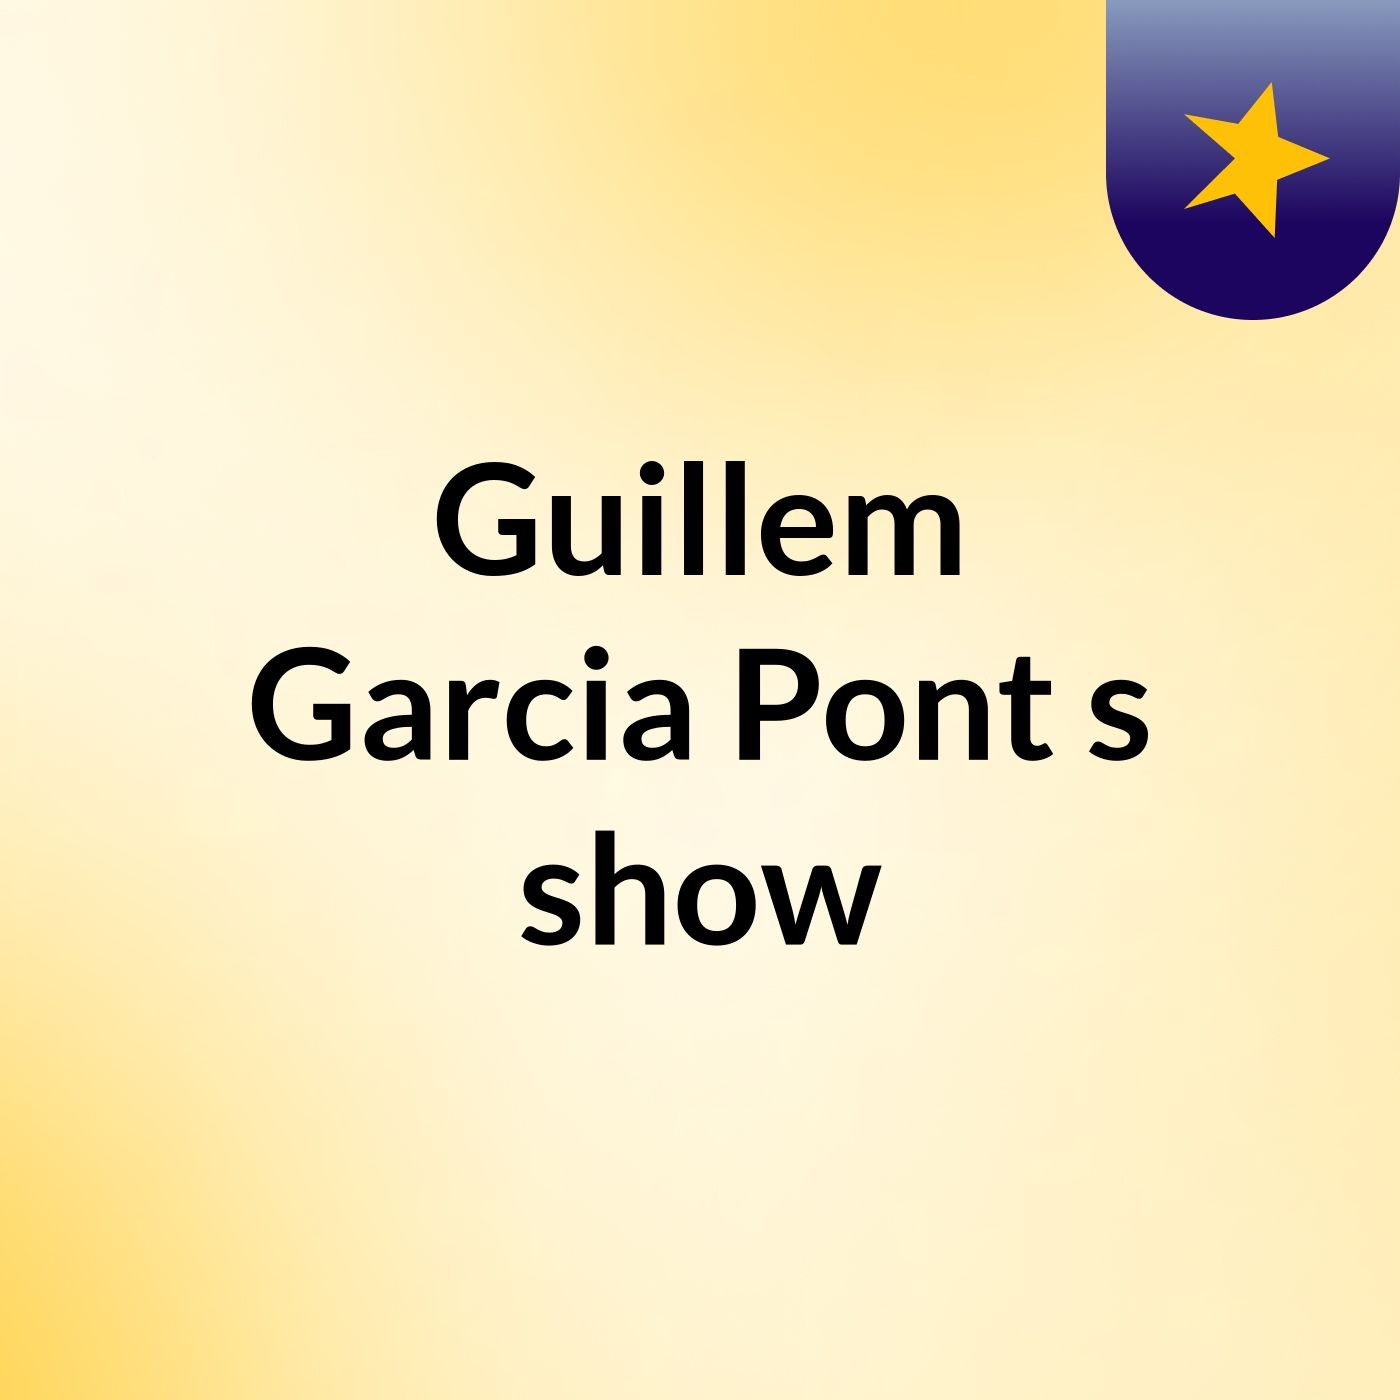 Guillem Garcia Pont's show